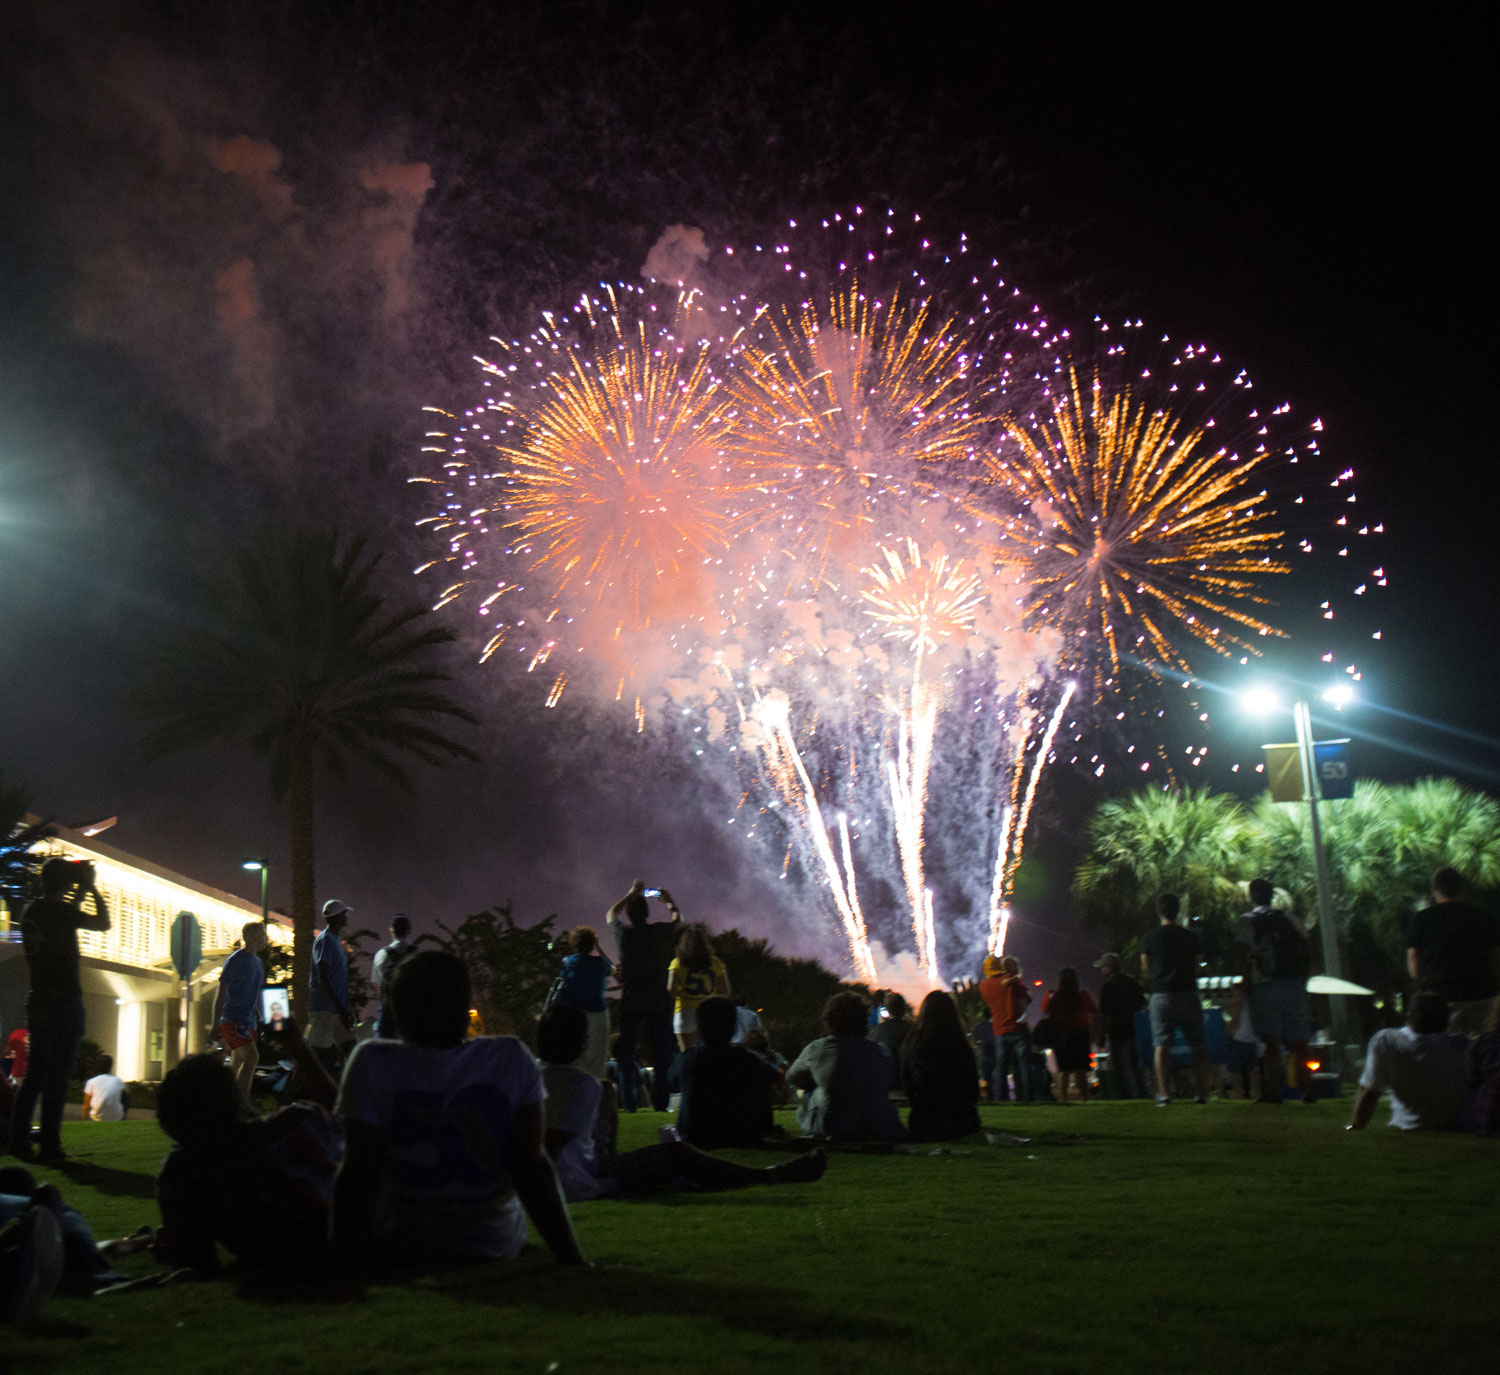 Fireworks were launched from the baseball diamond. (David Massey photo)